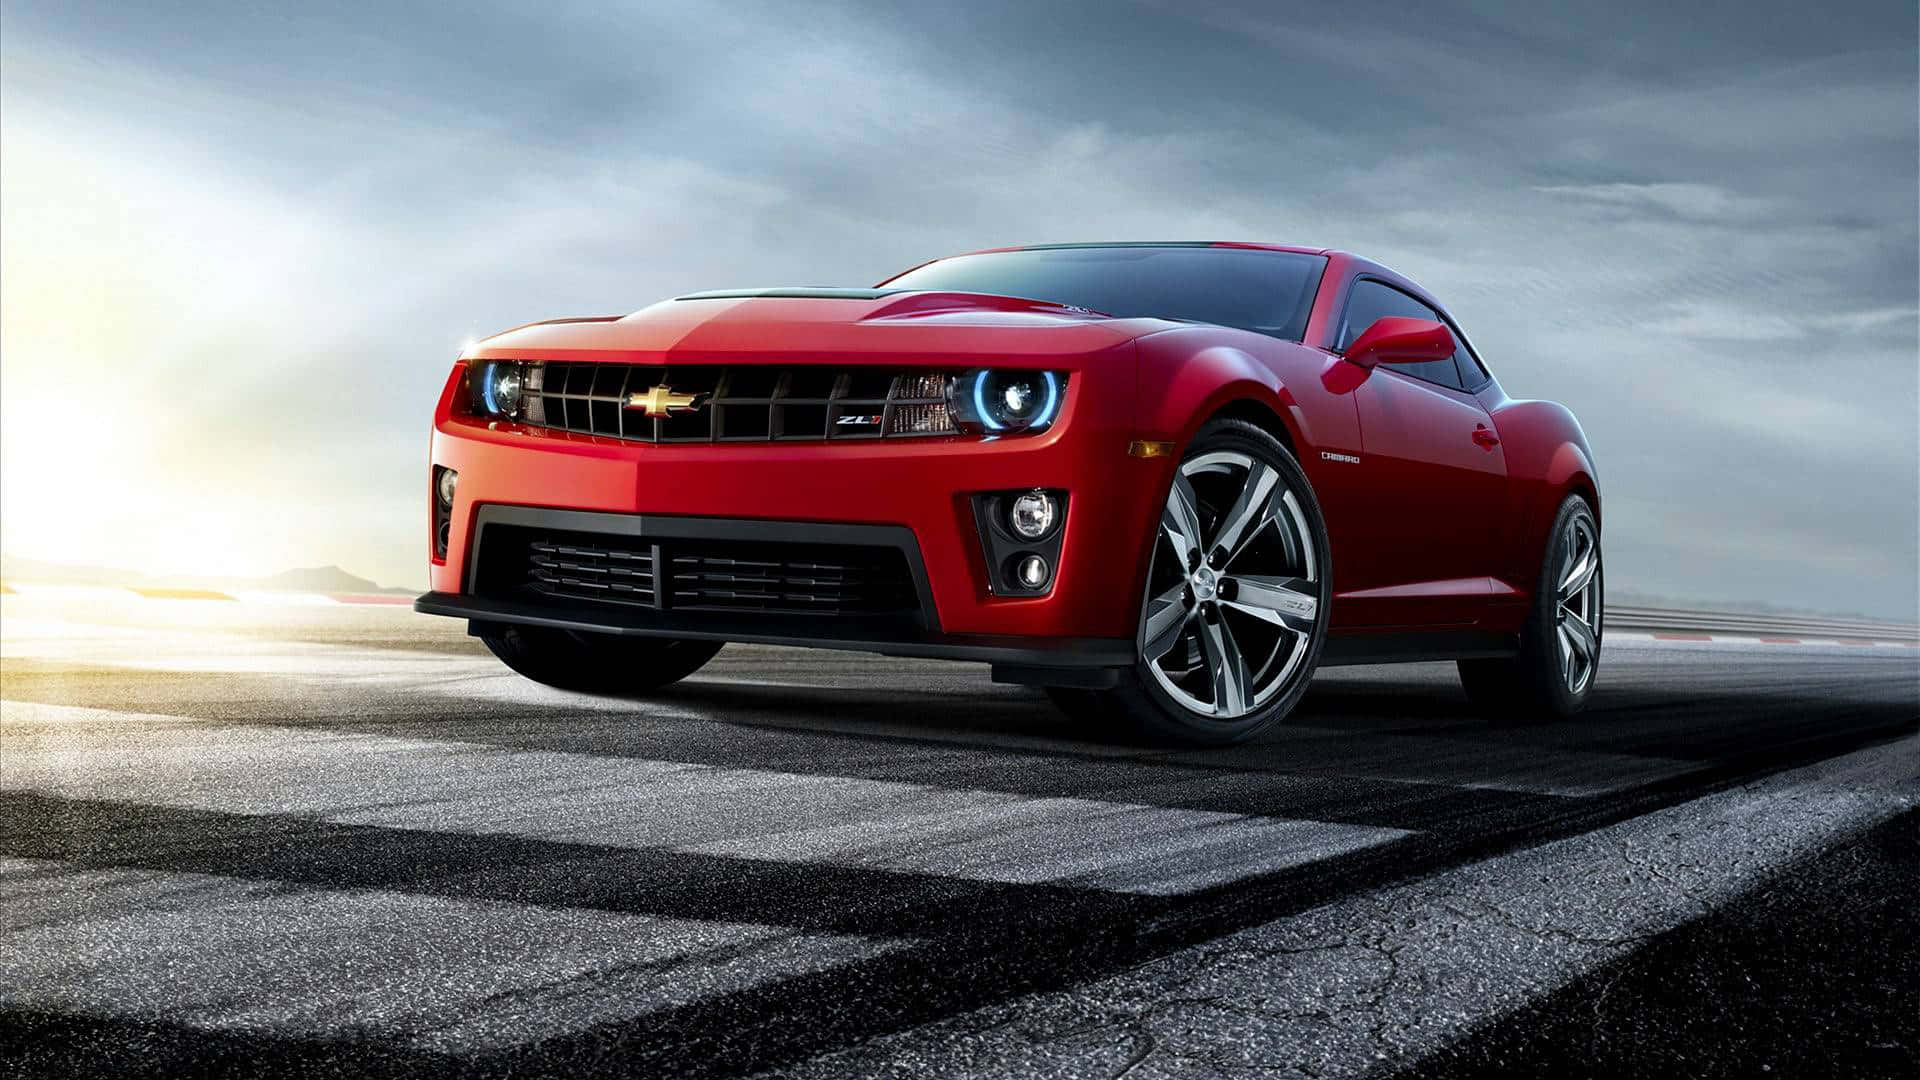 Breathtaking Red Chevrolet Best Car Background